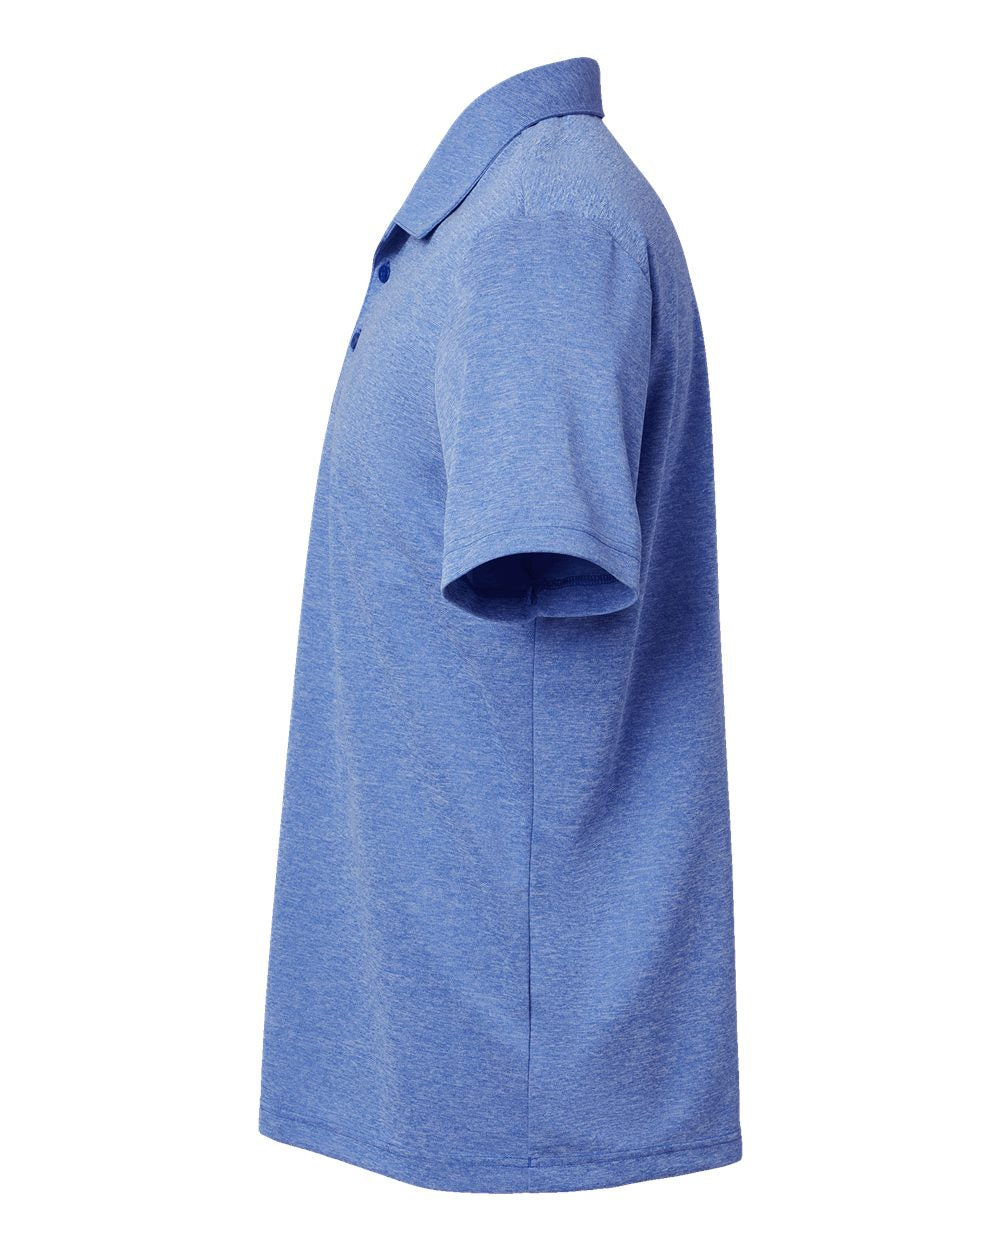 Adidas A582 Heathered Polo Shirt #color_Collegiate Royal Melange